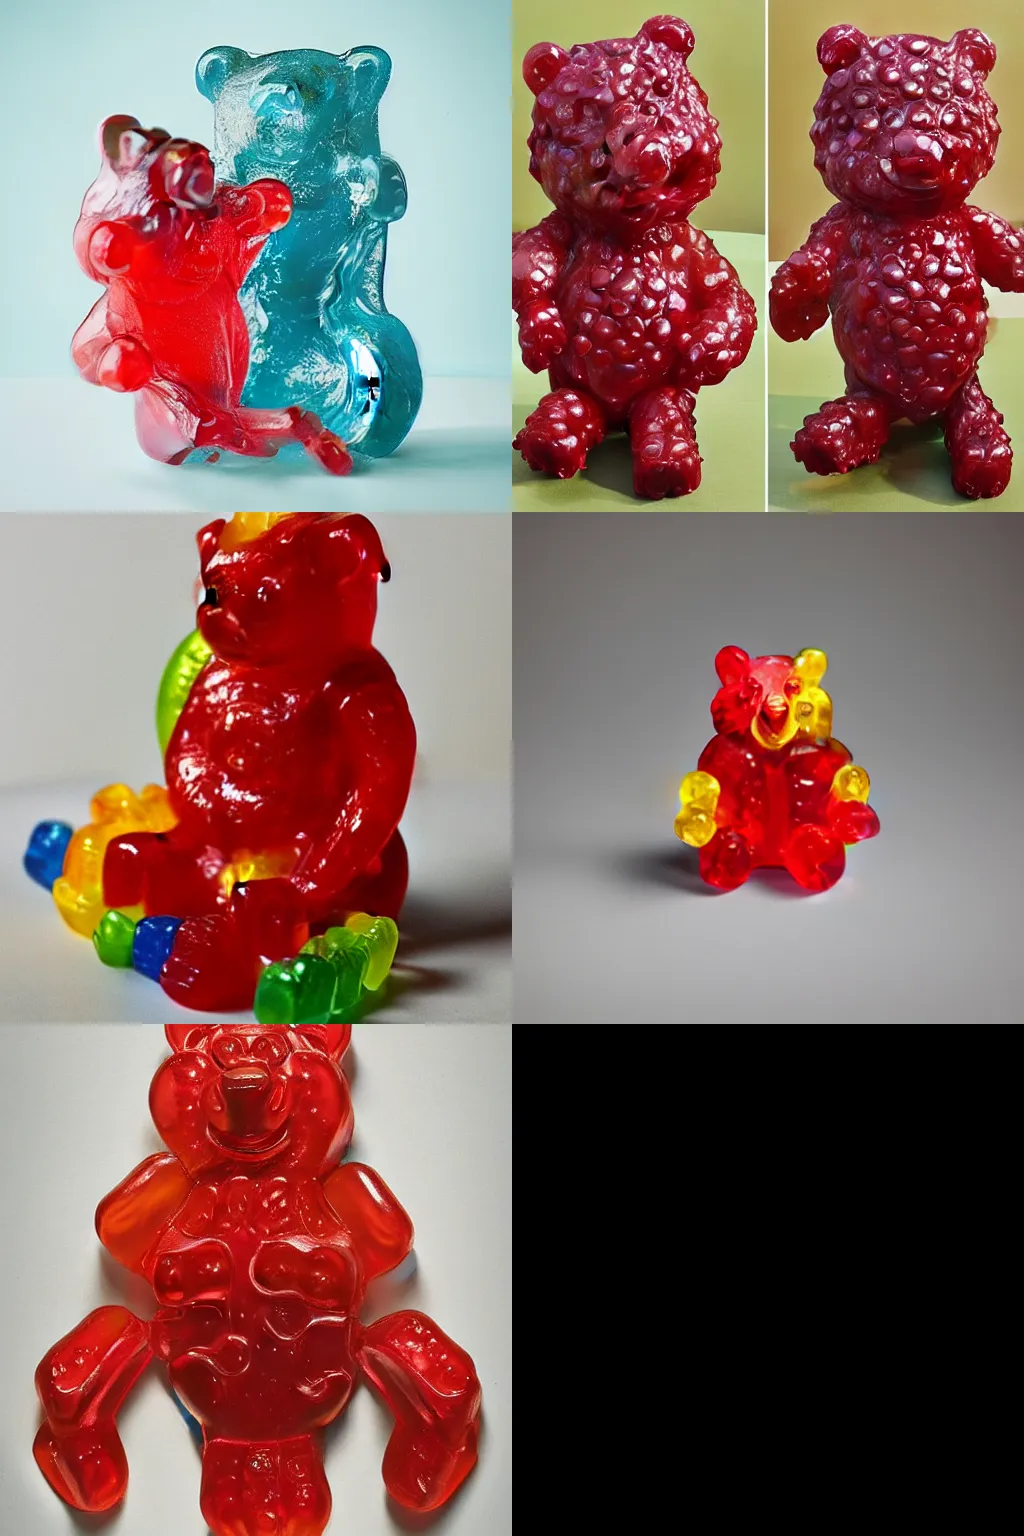 Prompt: gummy bear sculpture